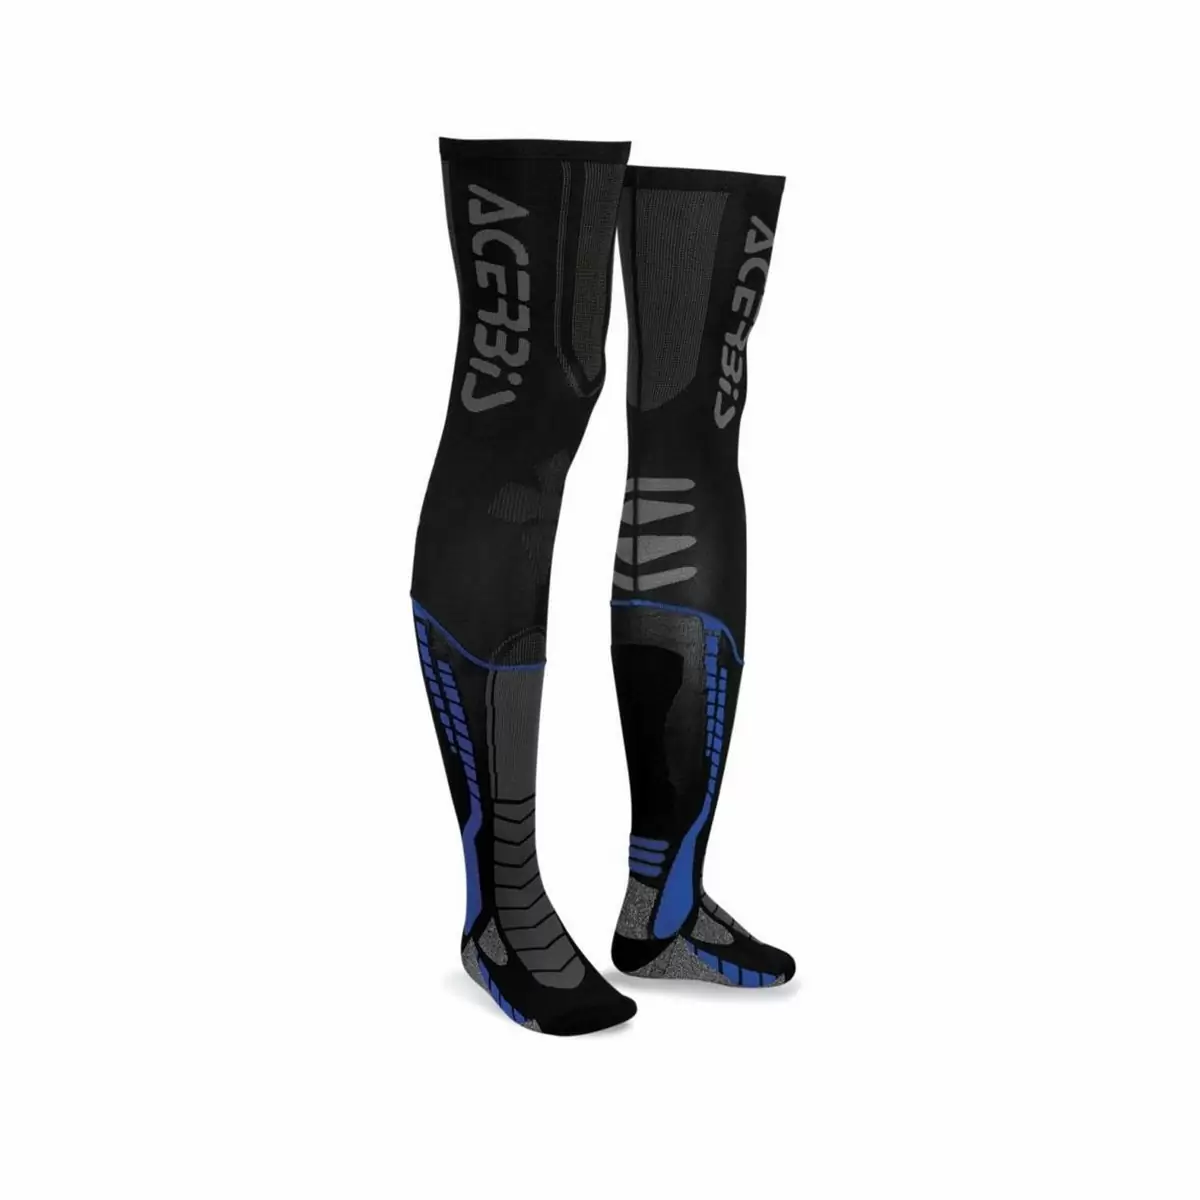 Calcetines largos motocross X-LEG pro azul talla L/XL - image